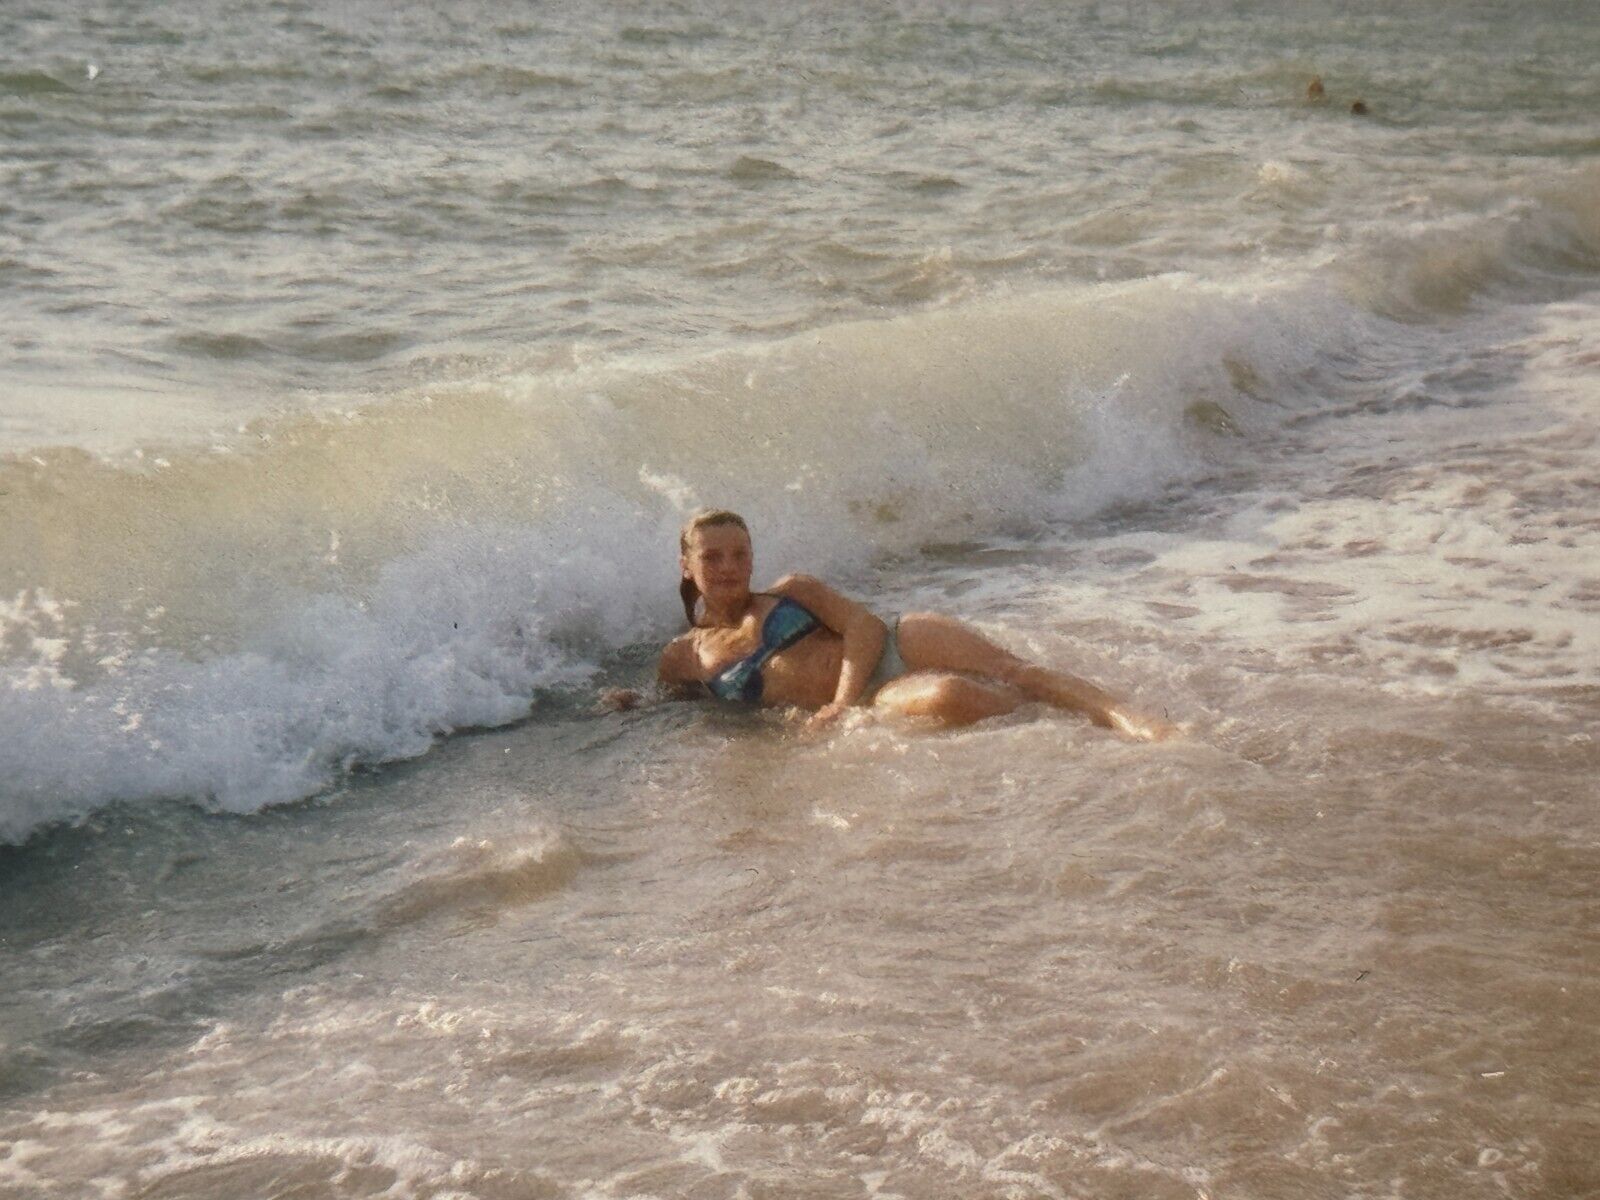 2013 Young Pretty Woman Bikini Lies in the Sea Waves Vintage Photo